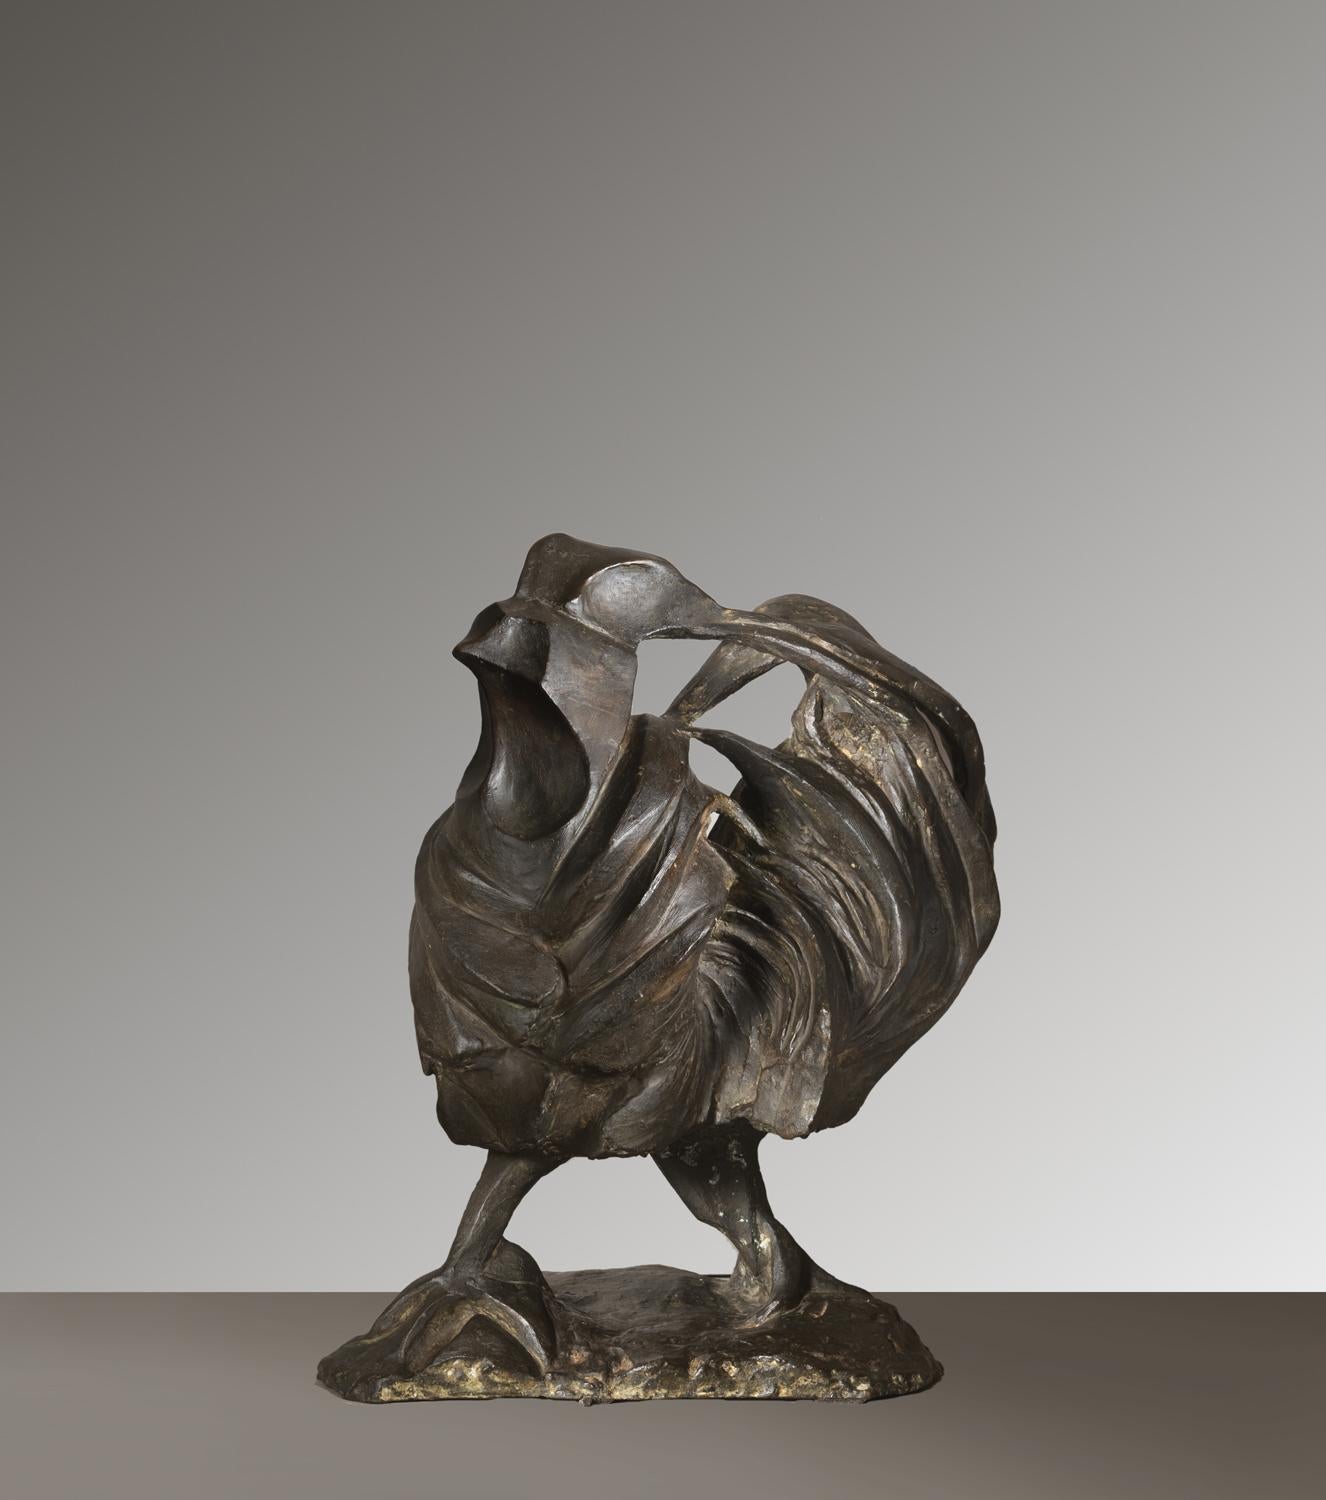 Futurist abstract figurative bronze sculpture with animal theme